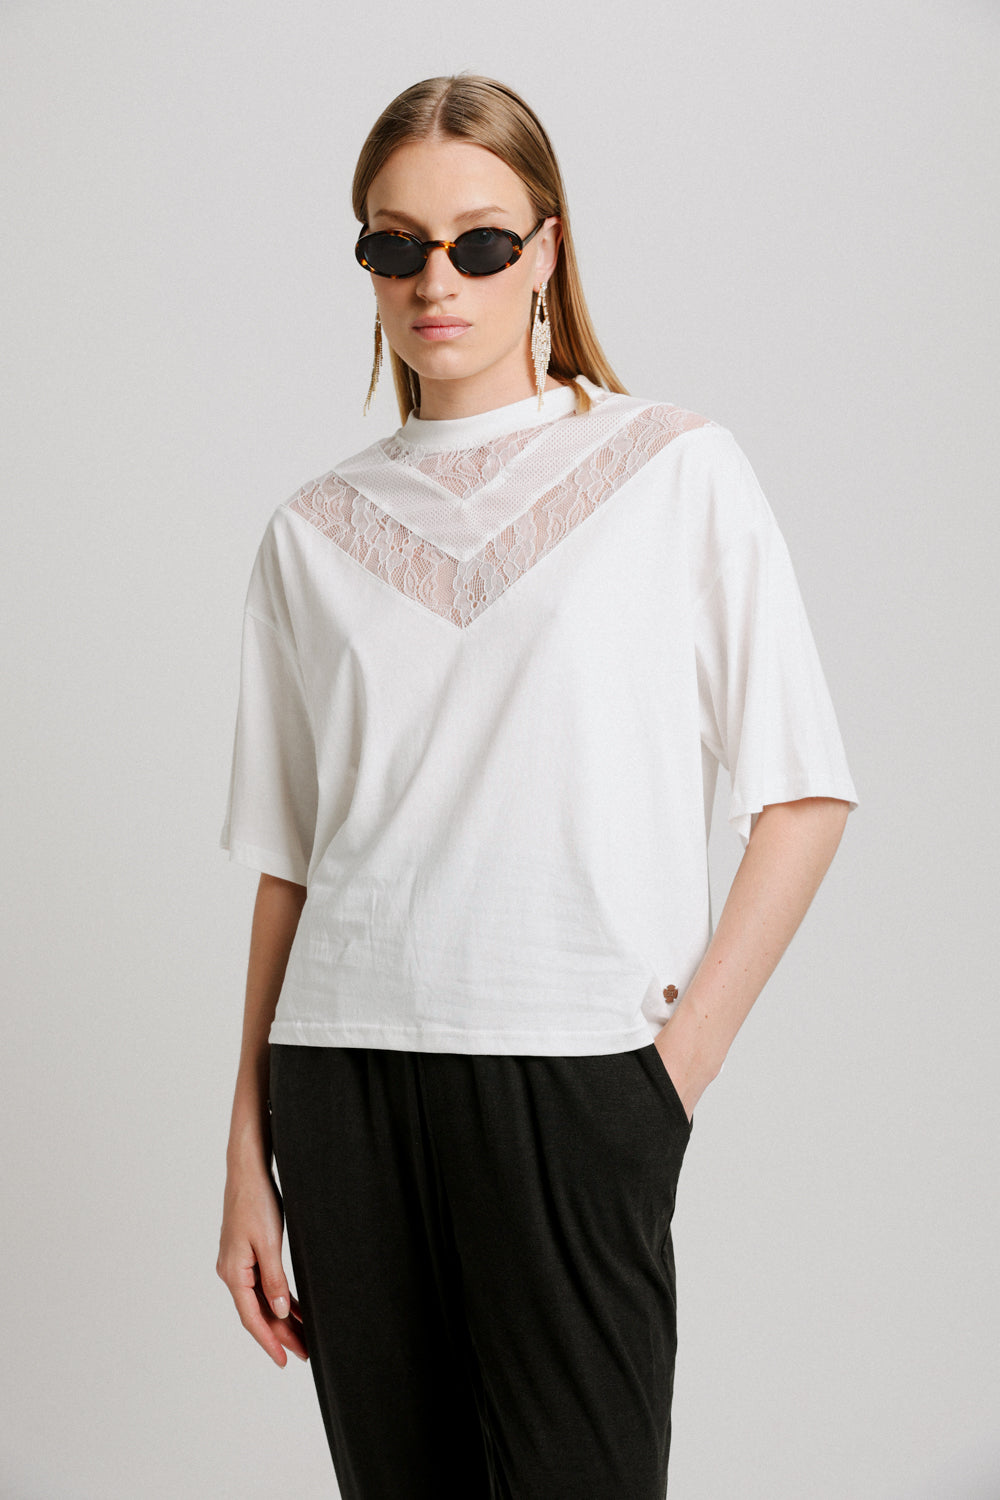 Lace White T-Shirt